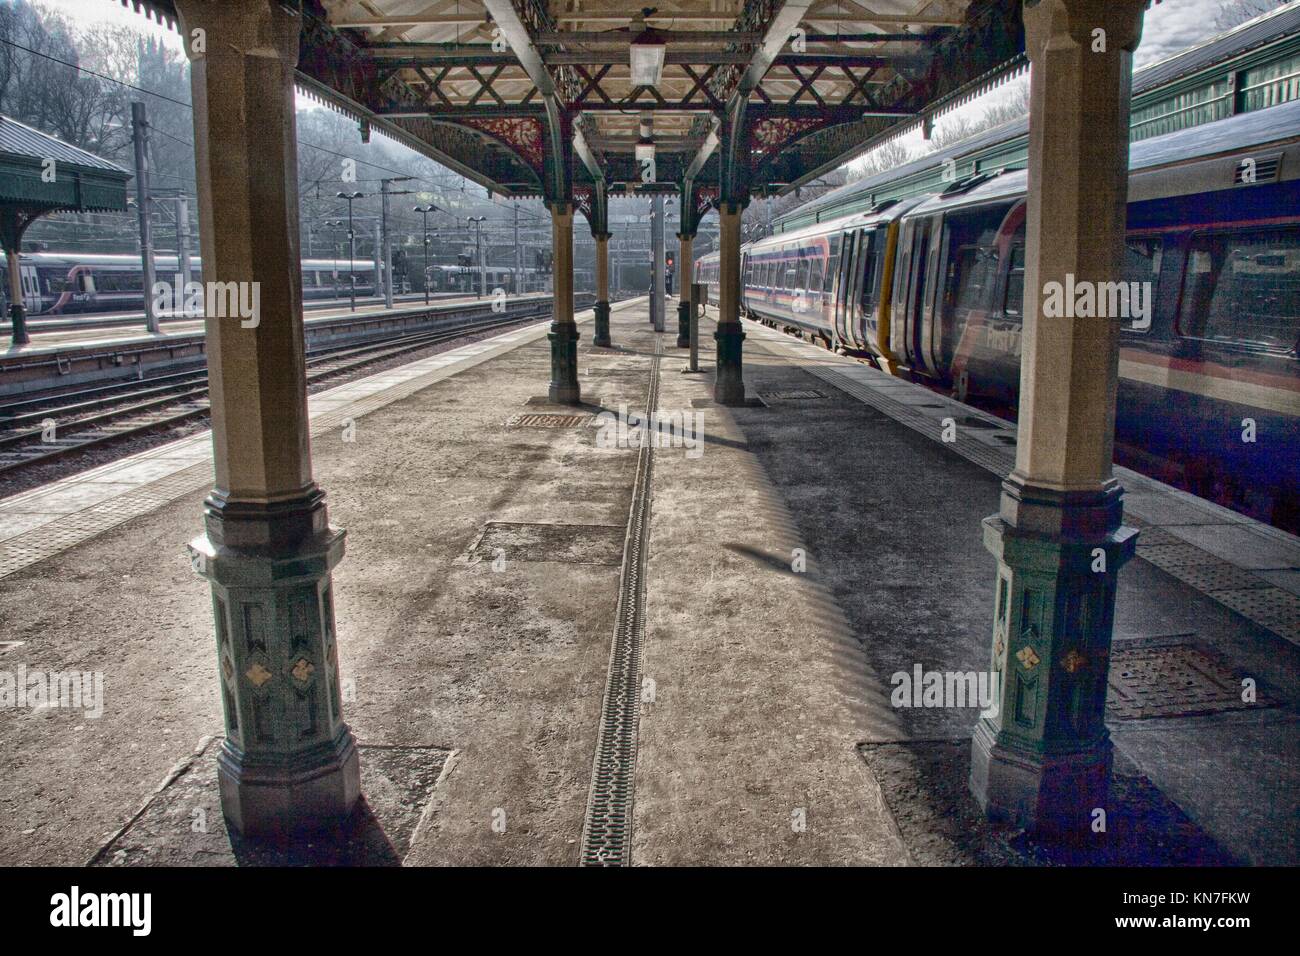 Railway station Platforms in Edinburgh, Scotland UK. Filtered. Stock Photo